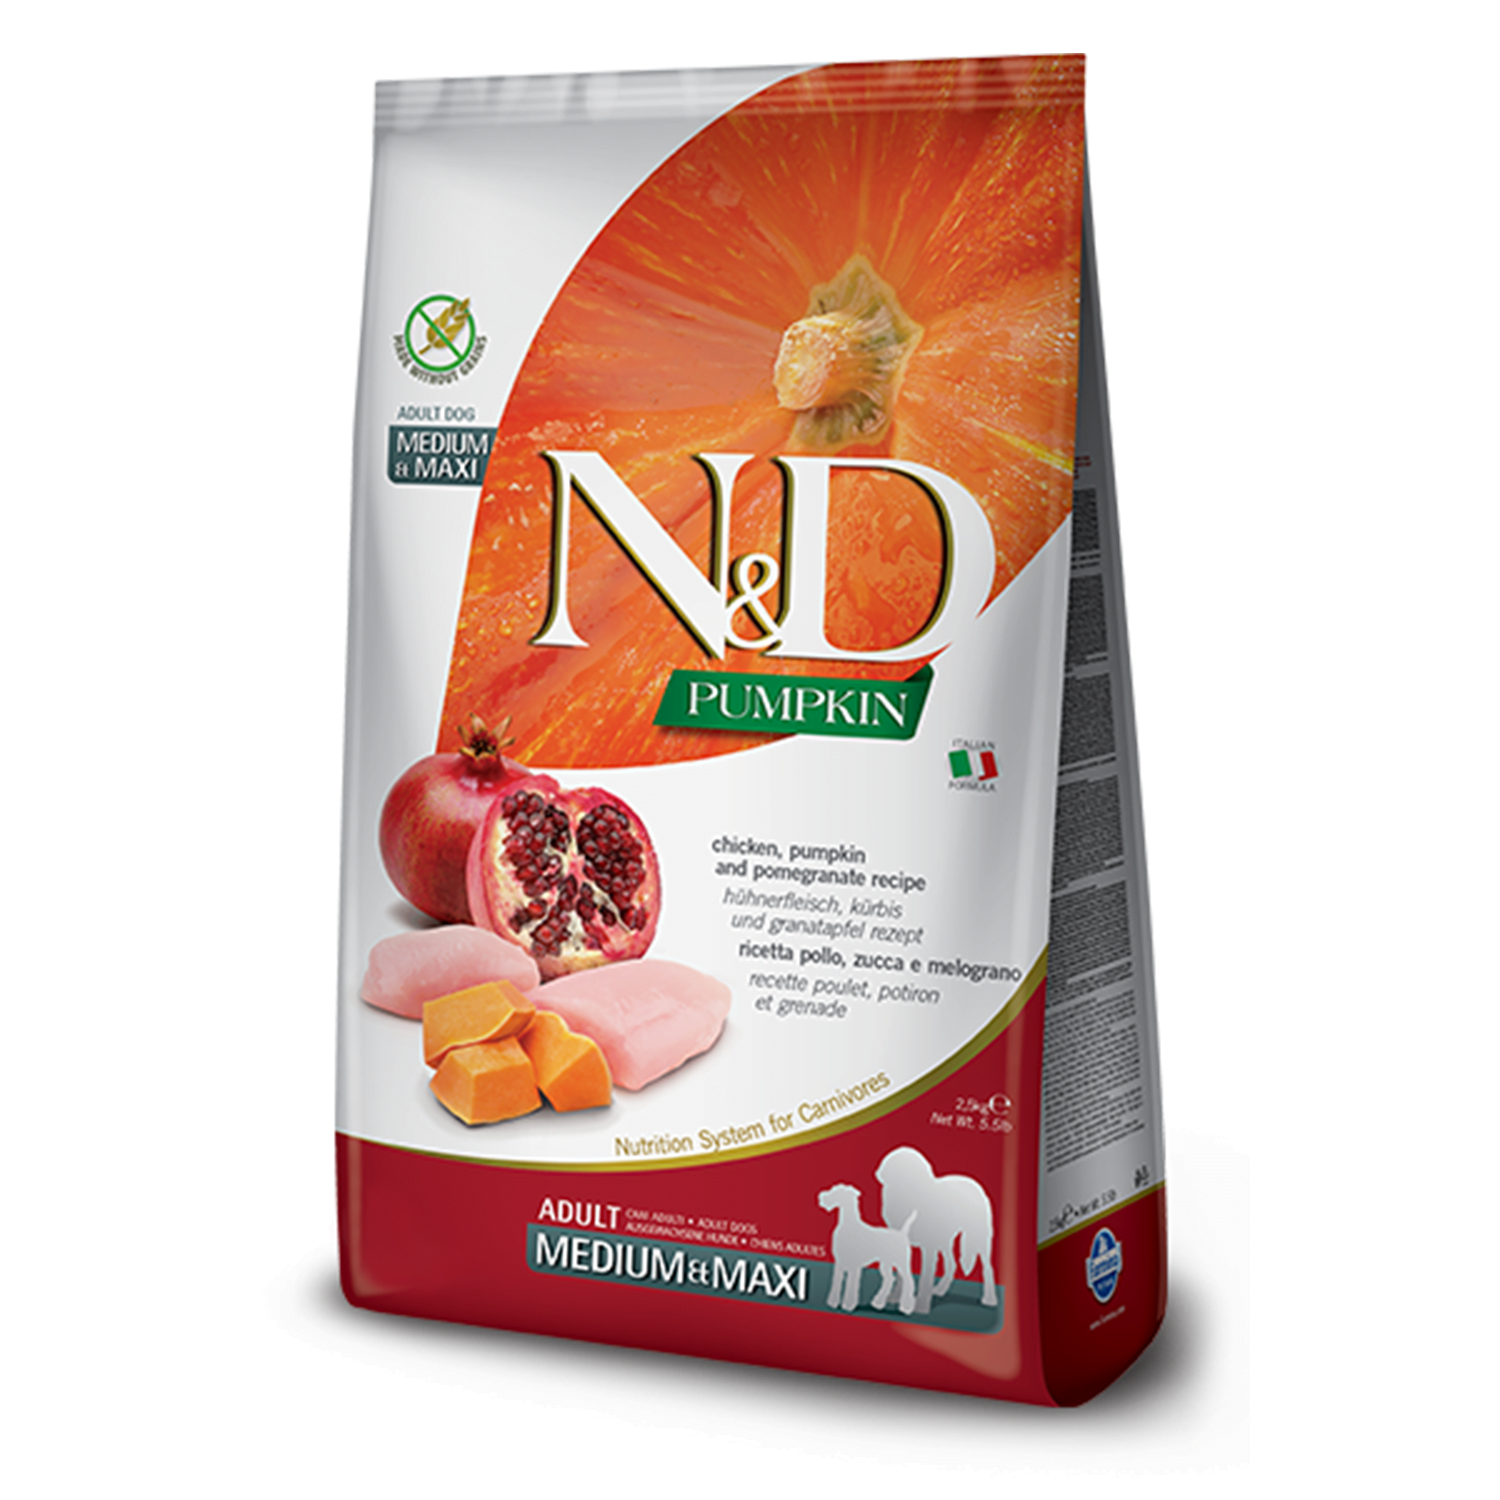 N&D Pumpkin Chicken & Pomegranate Adult Medium & Maxi